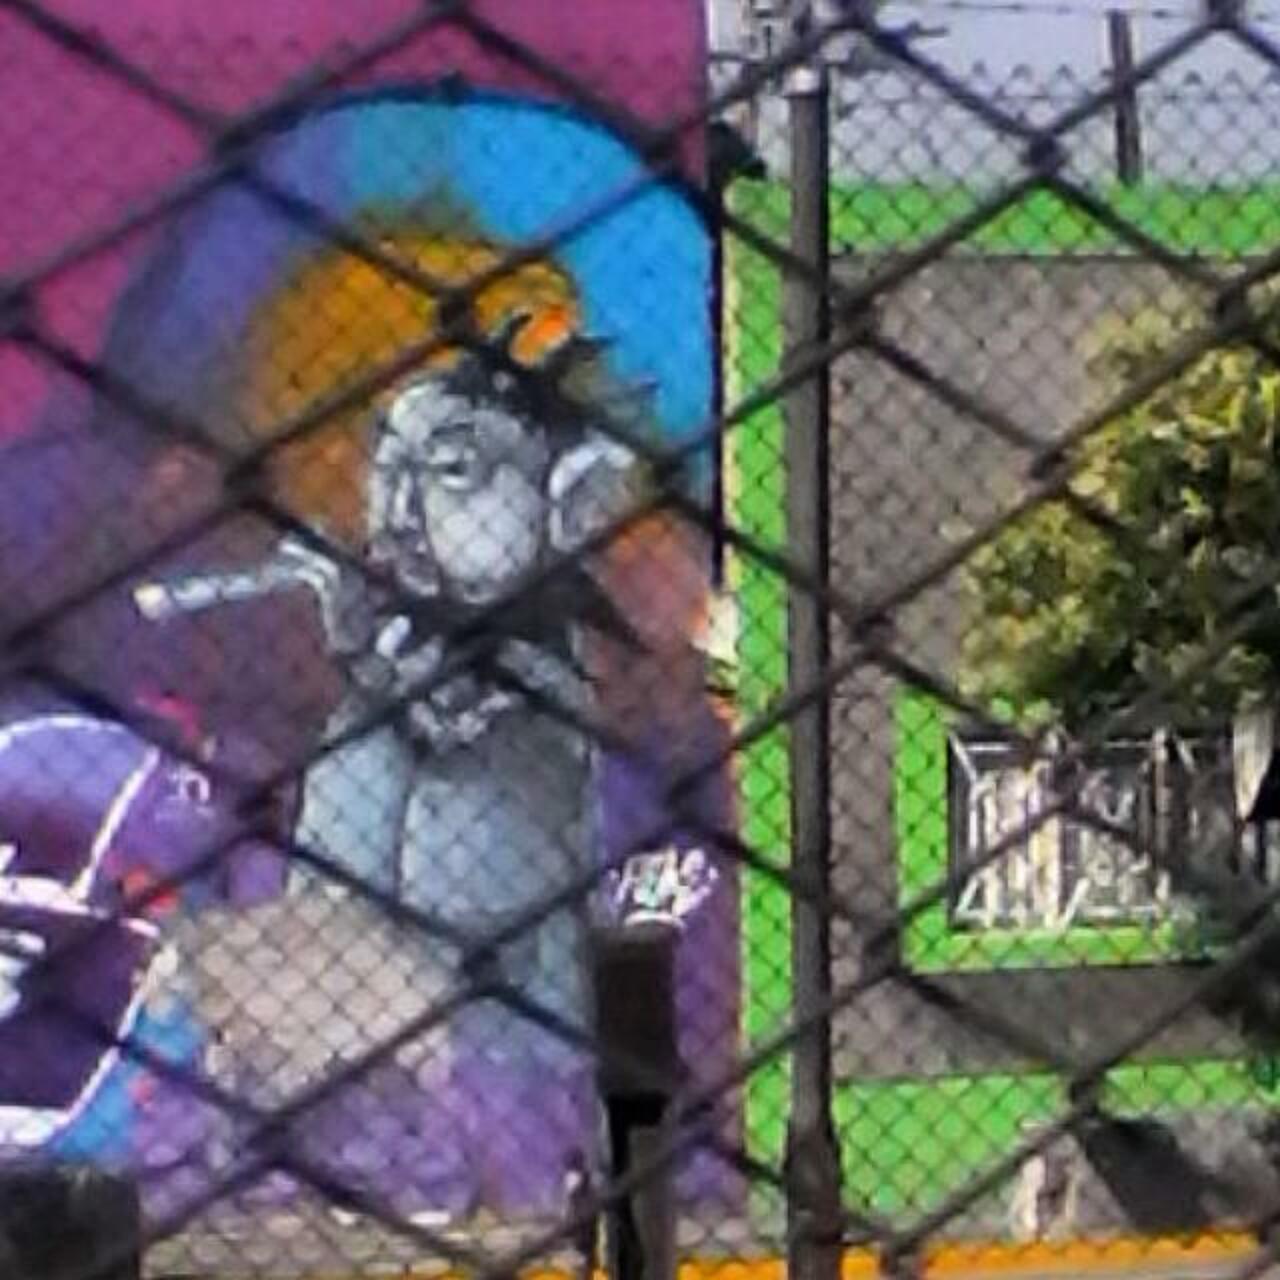 #Mexico #MexicoCity #StreetArt #Graffiti #StreetArtMexico #Urban #Art #Mural #Architecture #Wall #Steel #Mesh #Fenc… http://t.co/U4IuJSu2VZ